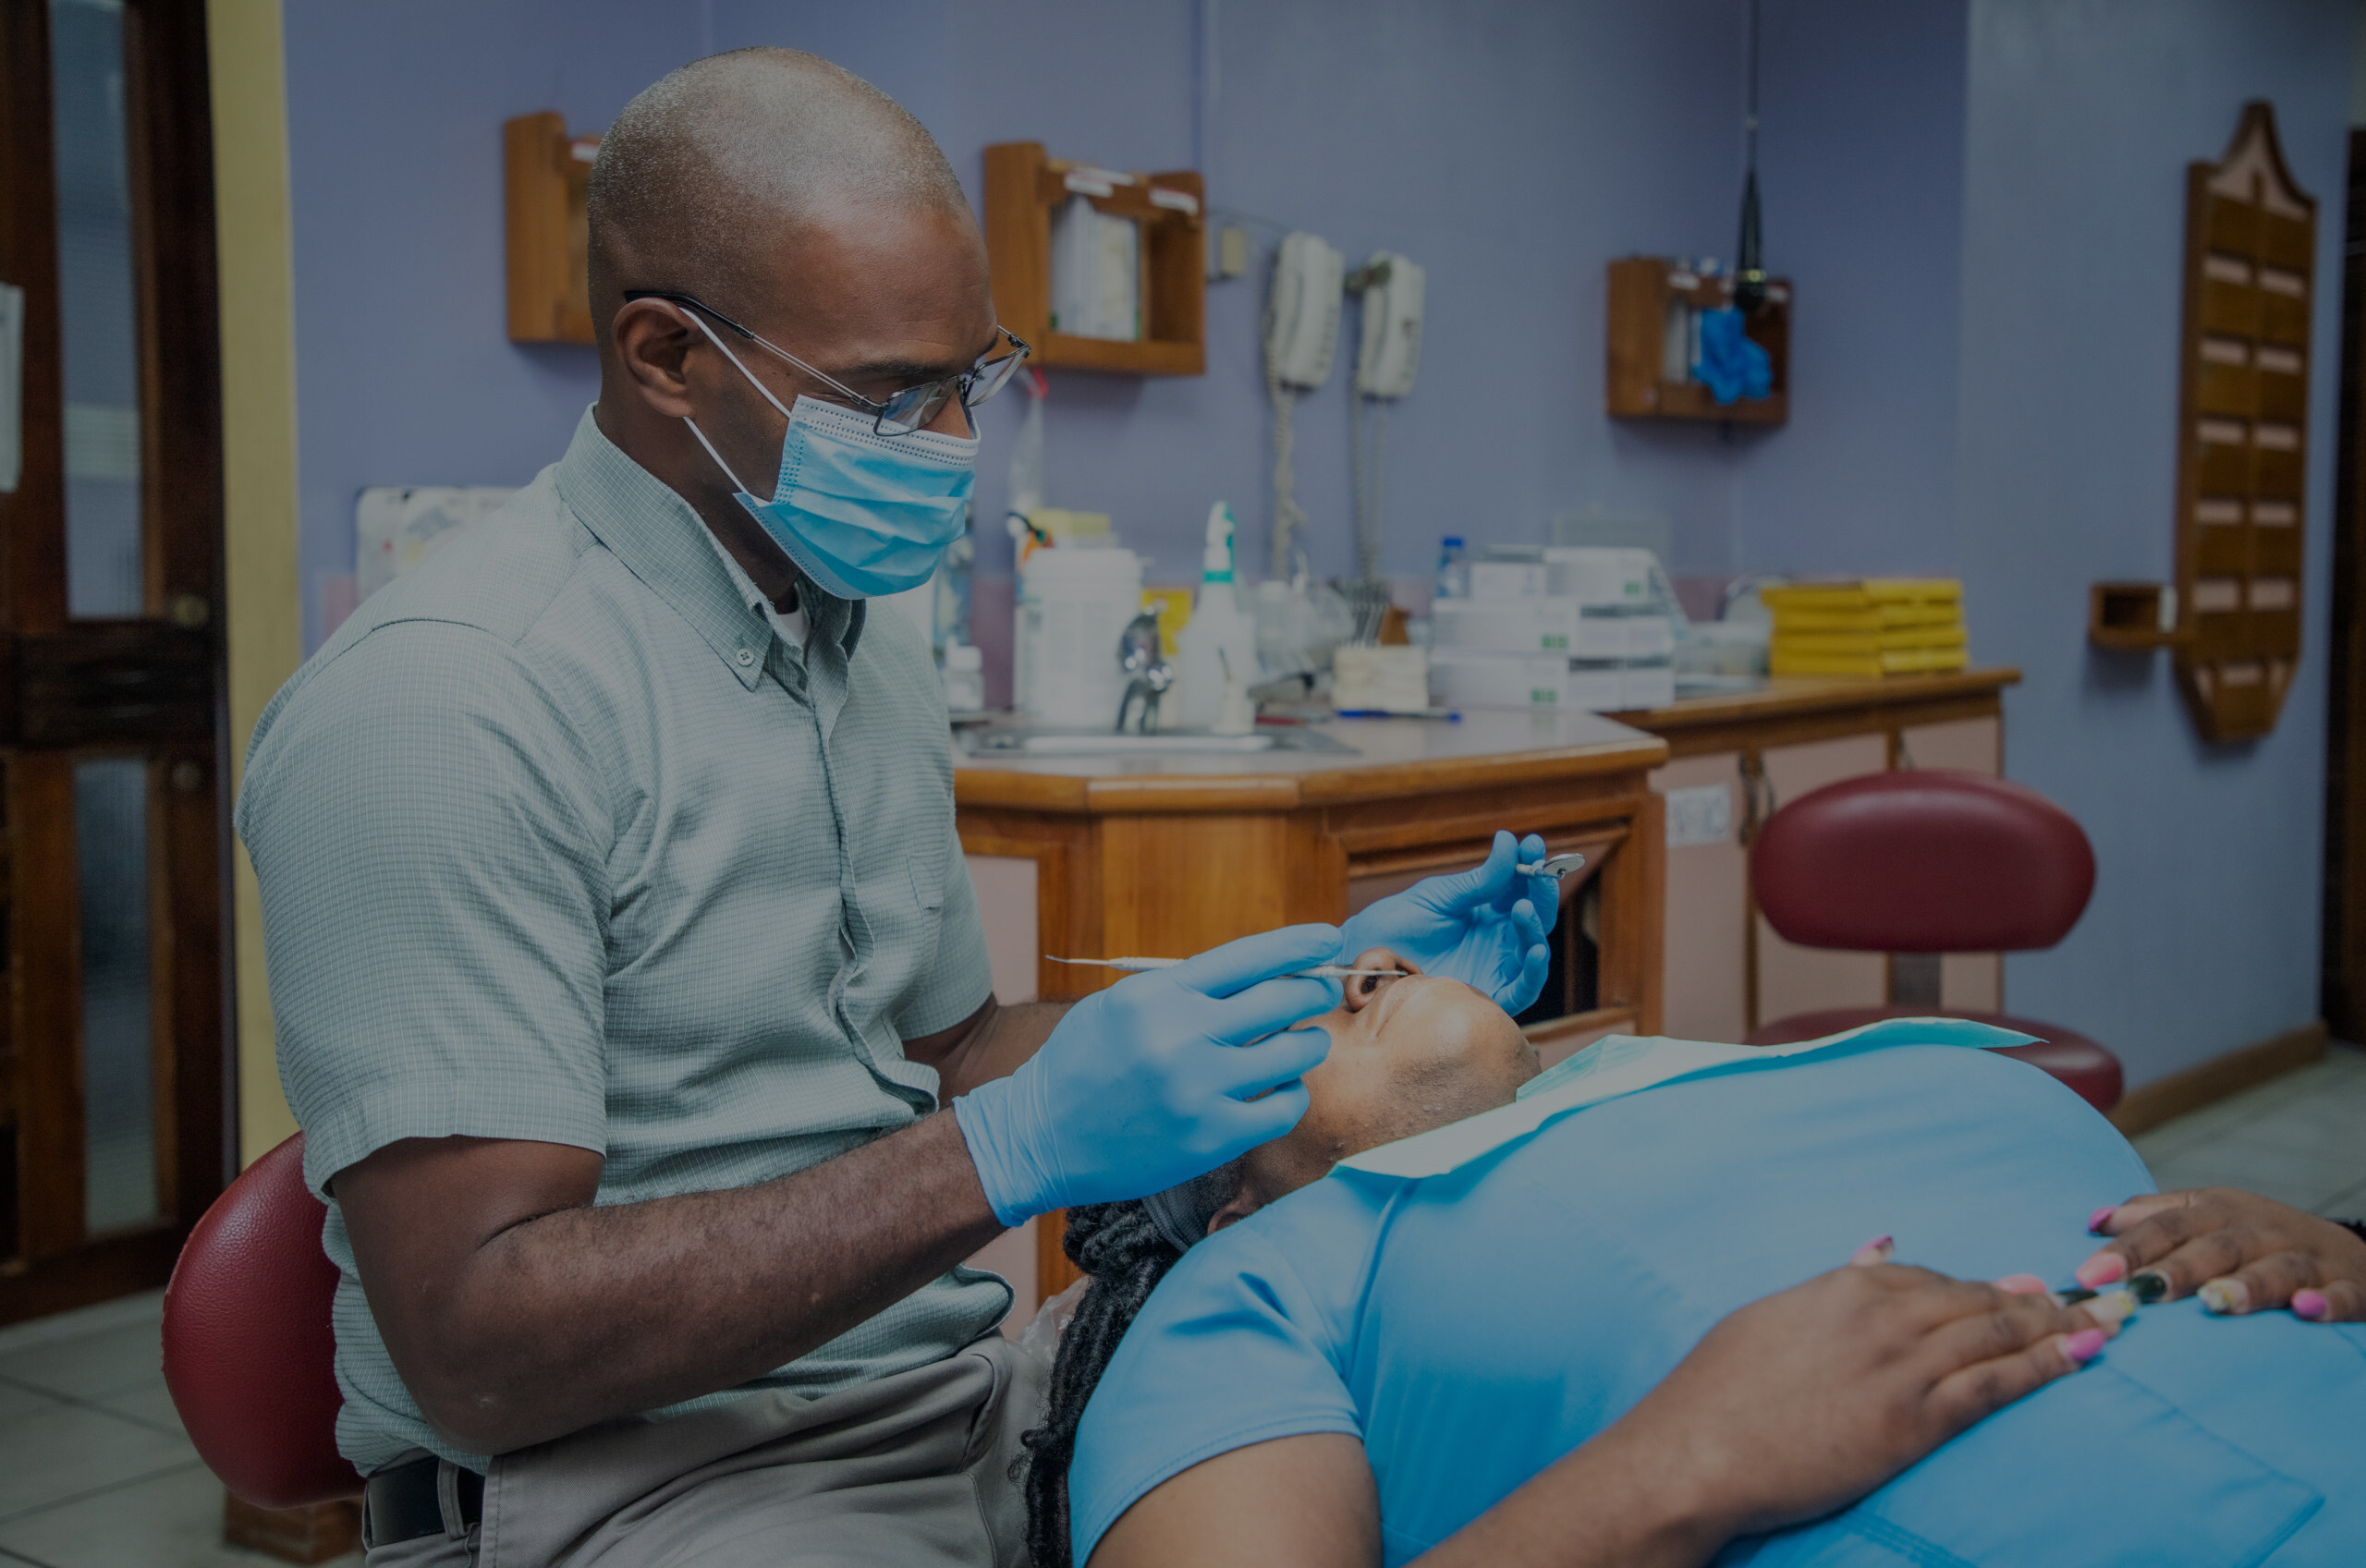 Dentist attending to patient